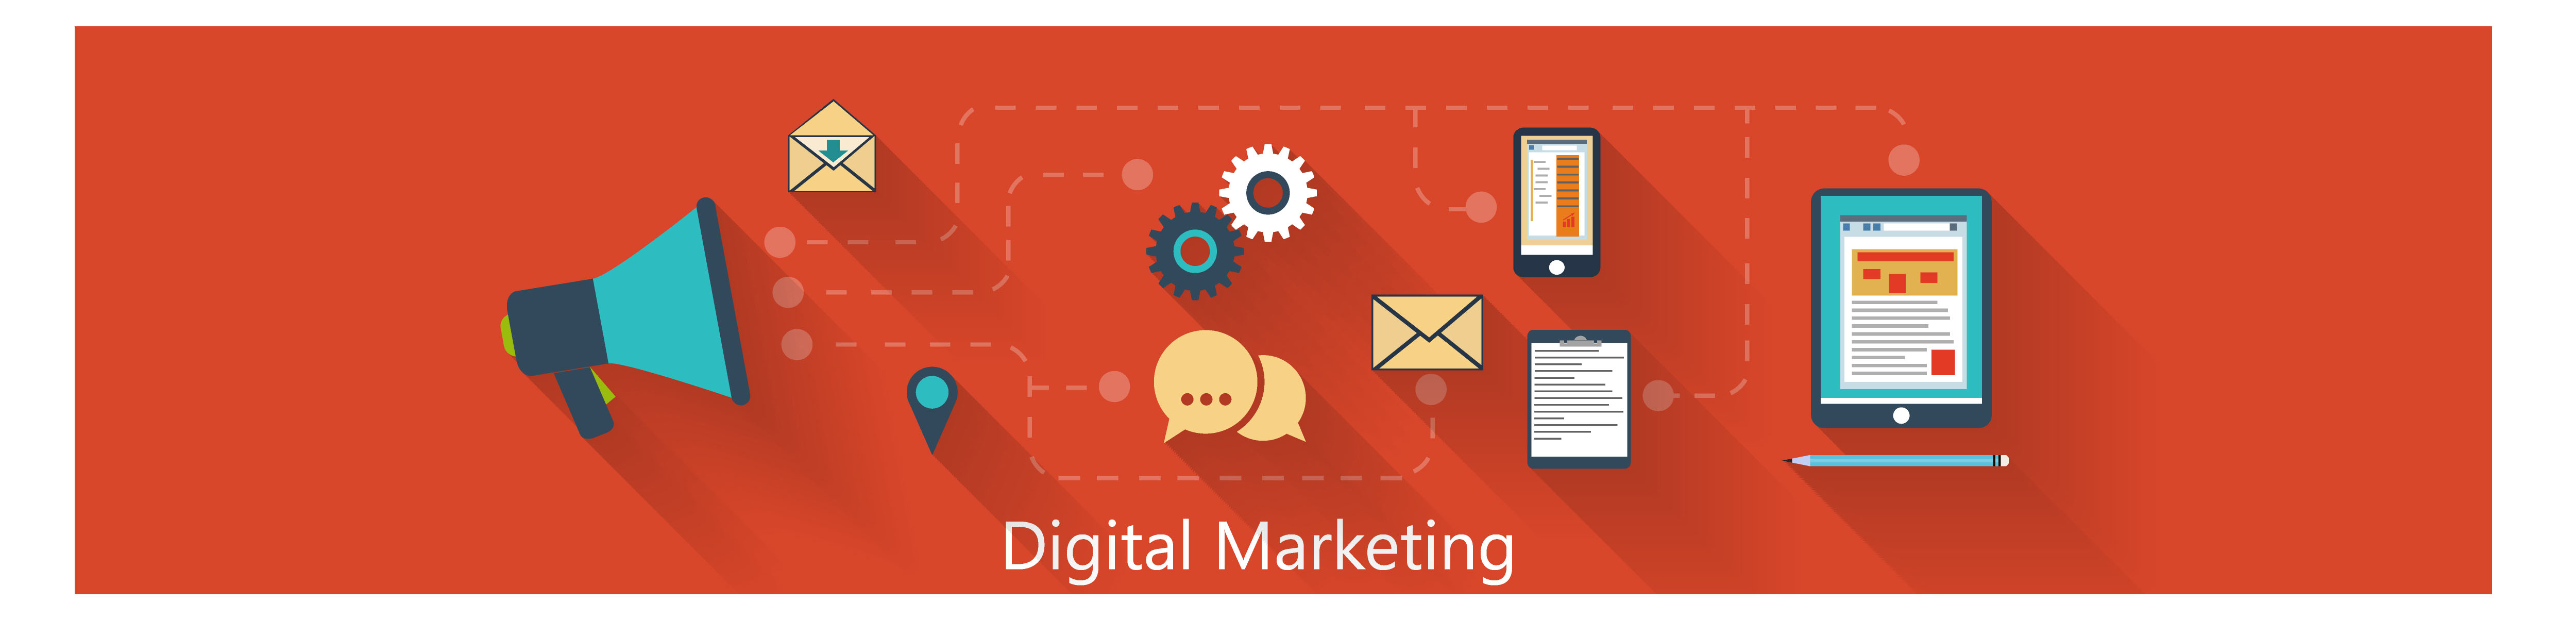 Modern Marketing In The Digital Age - SEO.com